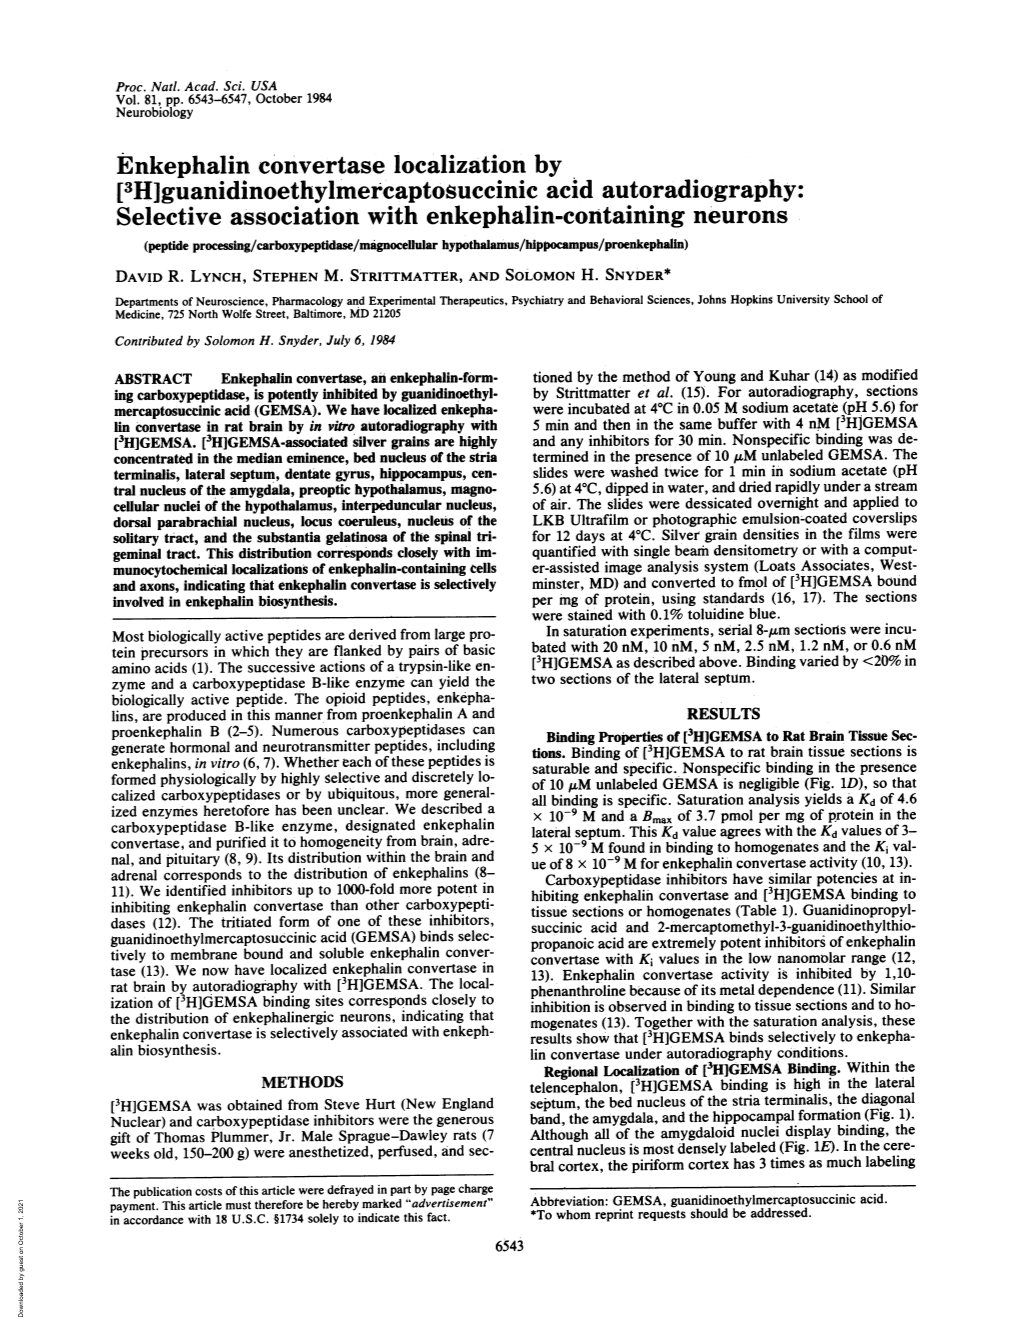 Selective Association with Enkephalin-Containing Neurons (Peptide Processing/Carboxypeptidase/Magnoceliular Hypothalamus/Hippocampus/Proenkephalin) DAVID R